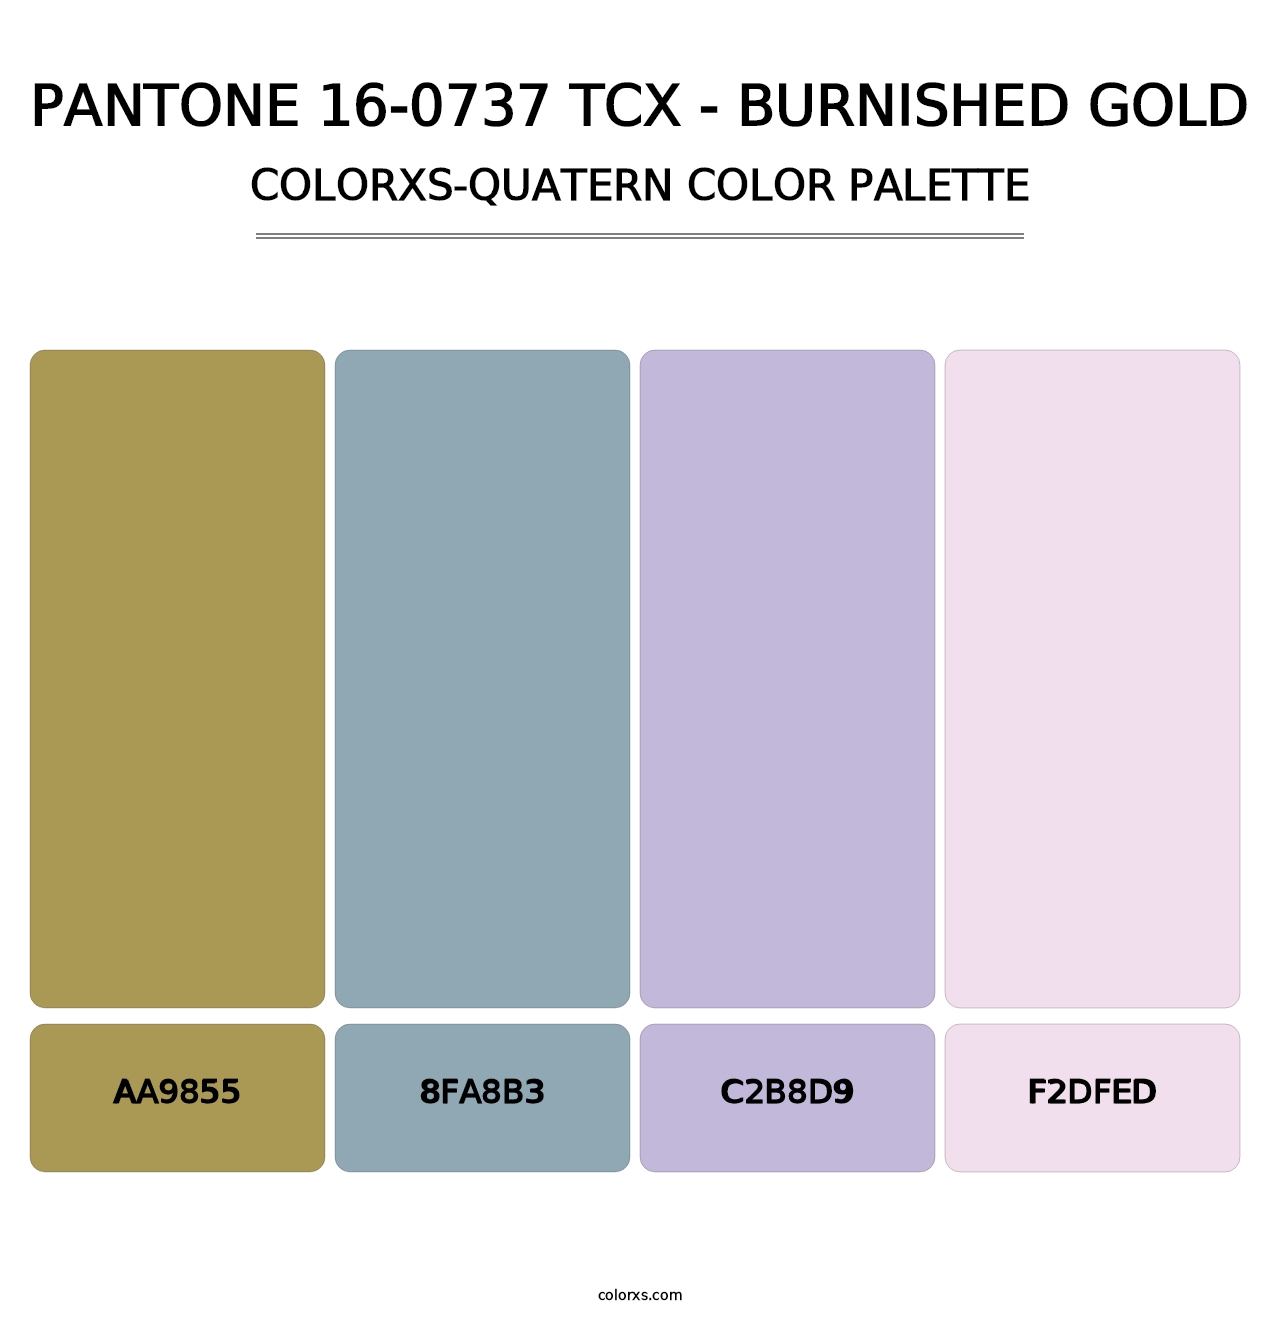 PANTONE 16-0737 TCX - Burnished Gold - Colorxs Quatern Palette